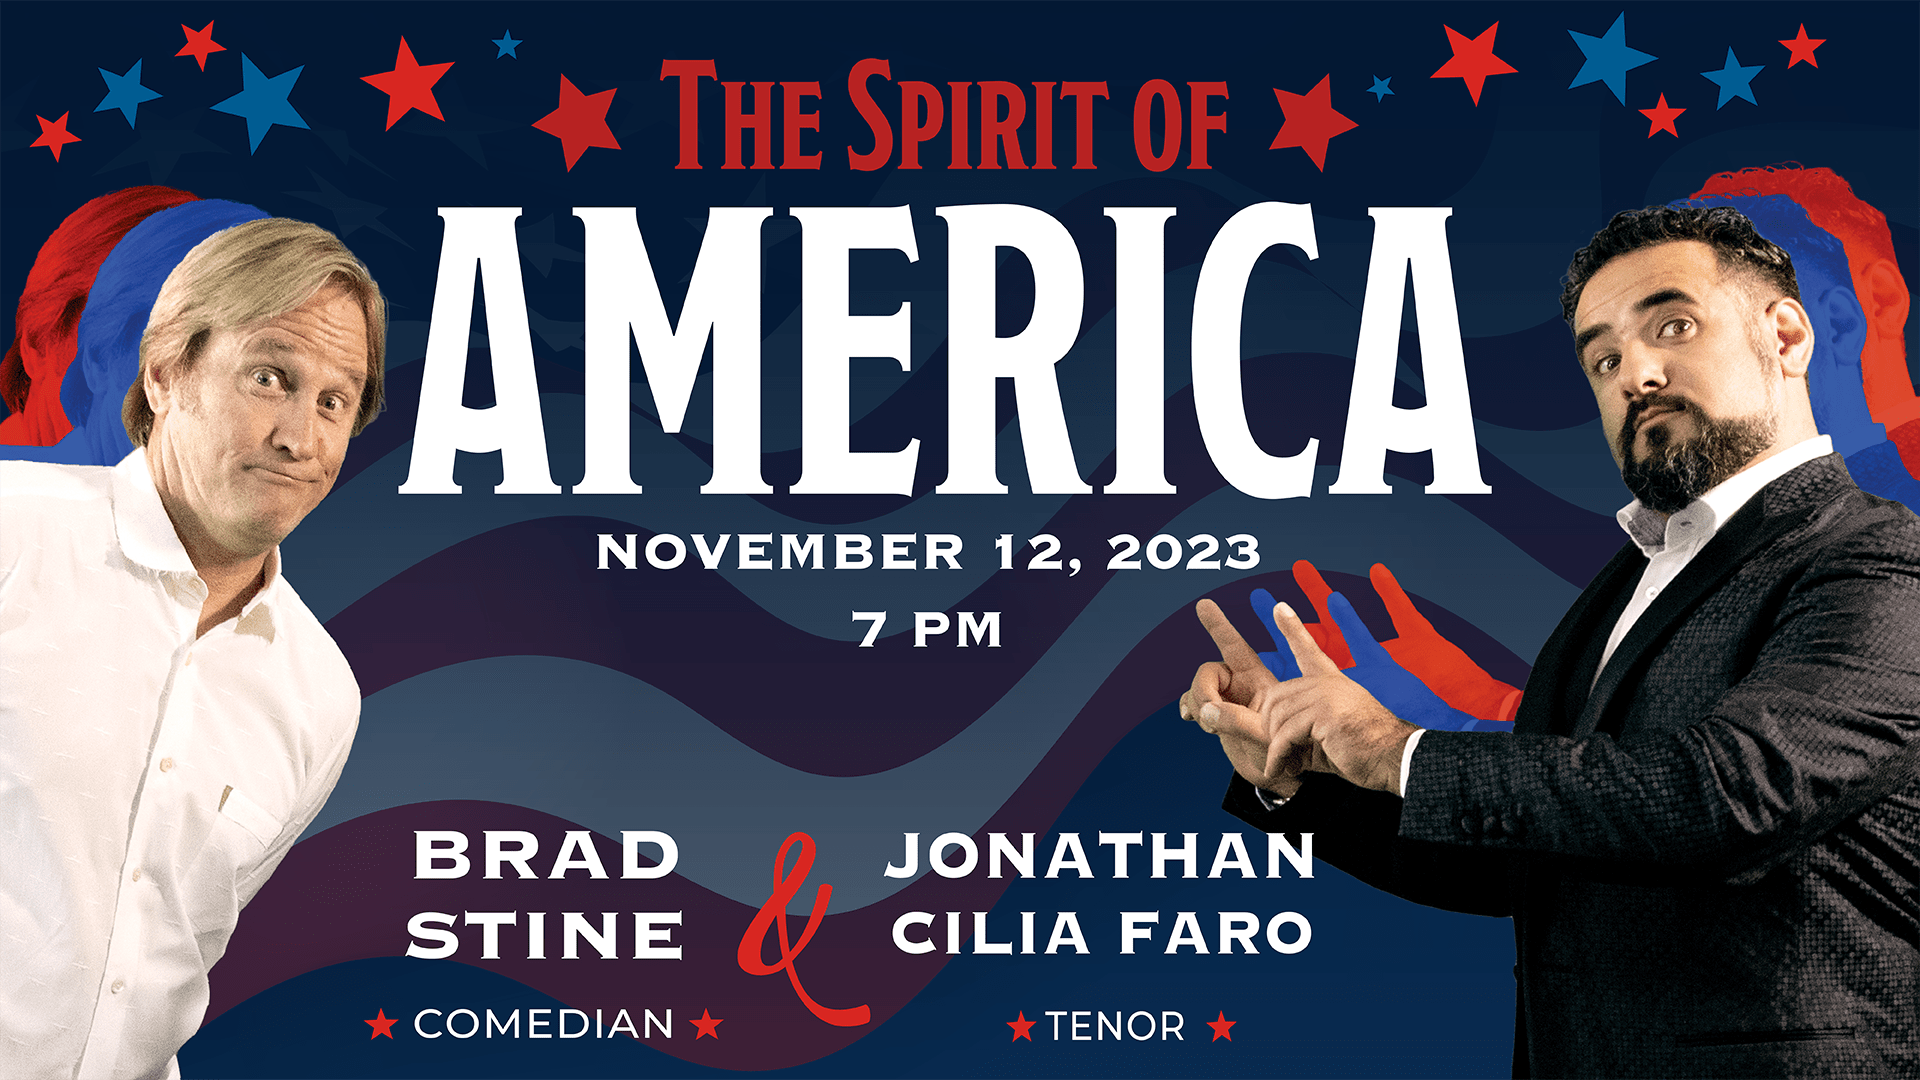 Spirit of America with Brad Stone and Jonathan Cilia Faro